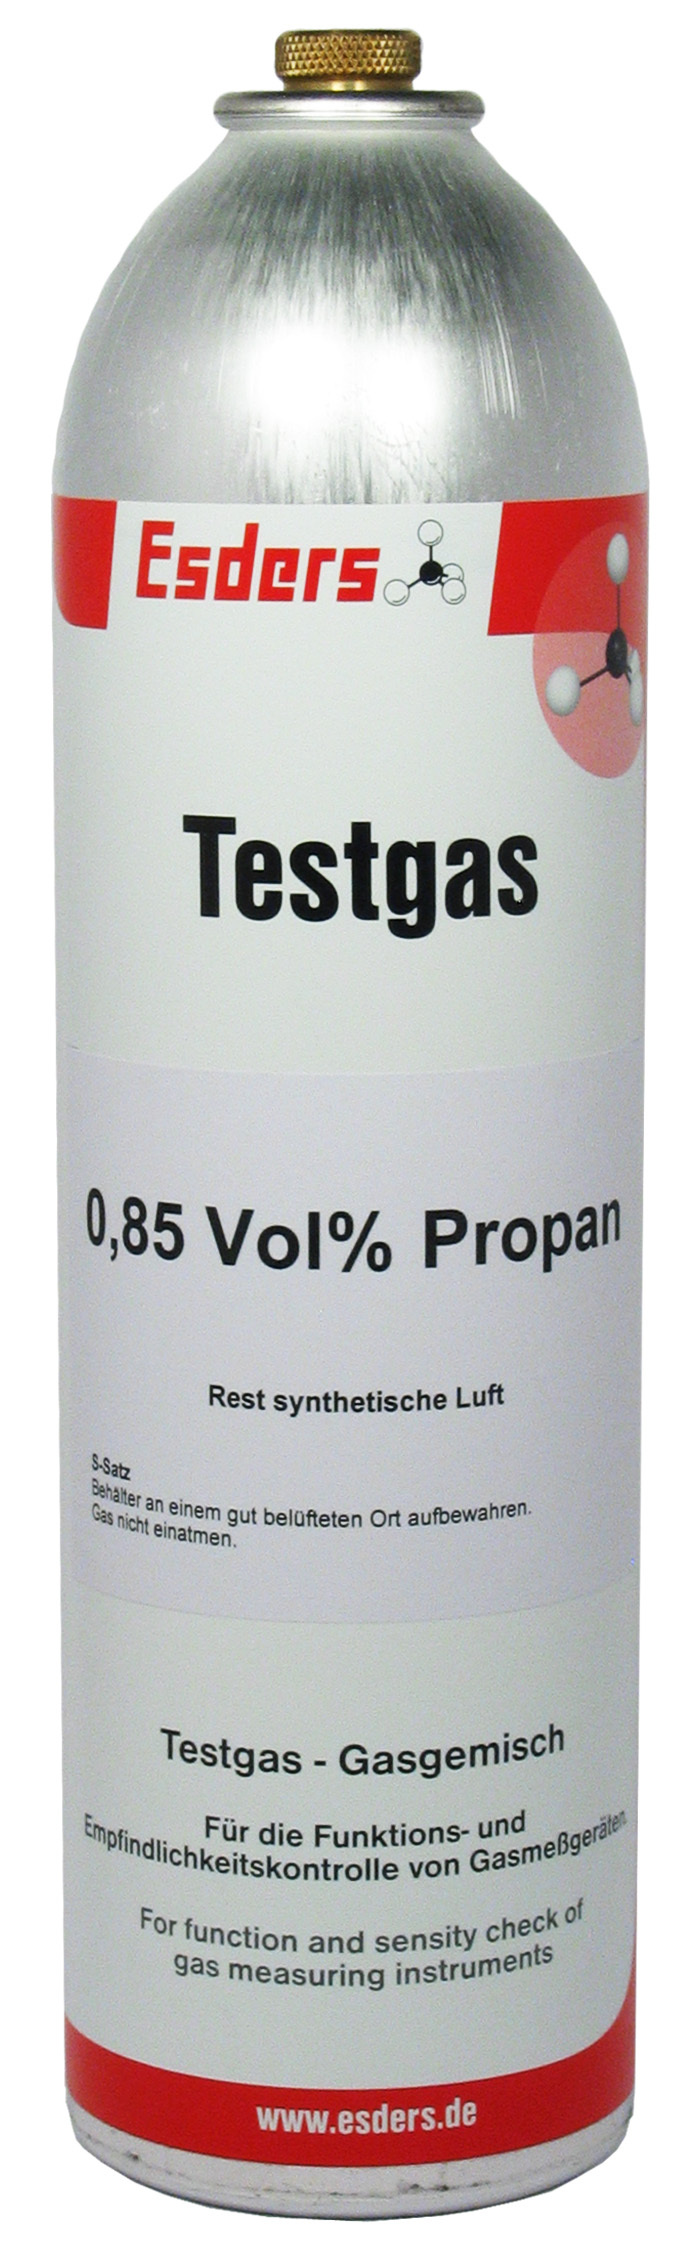 Test gas can 0,85 Vol.% propane